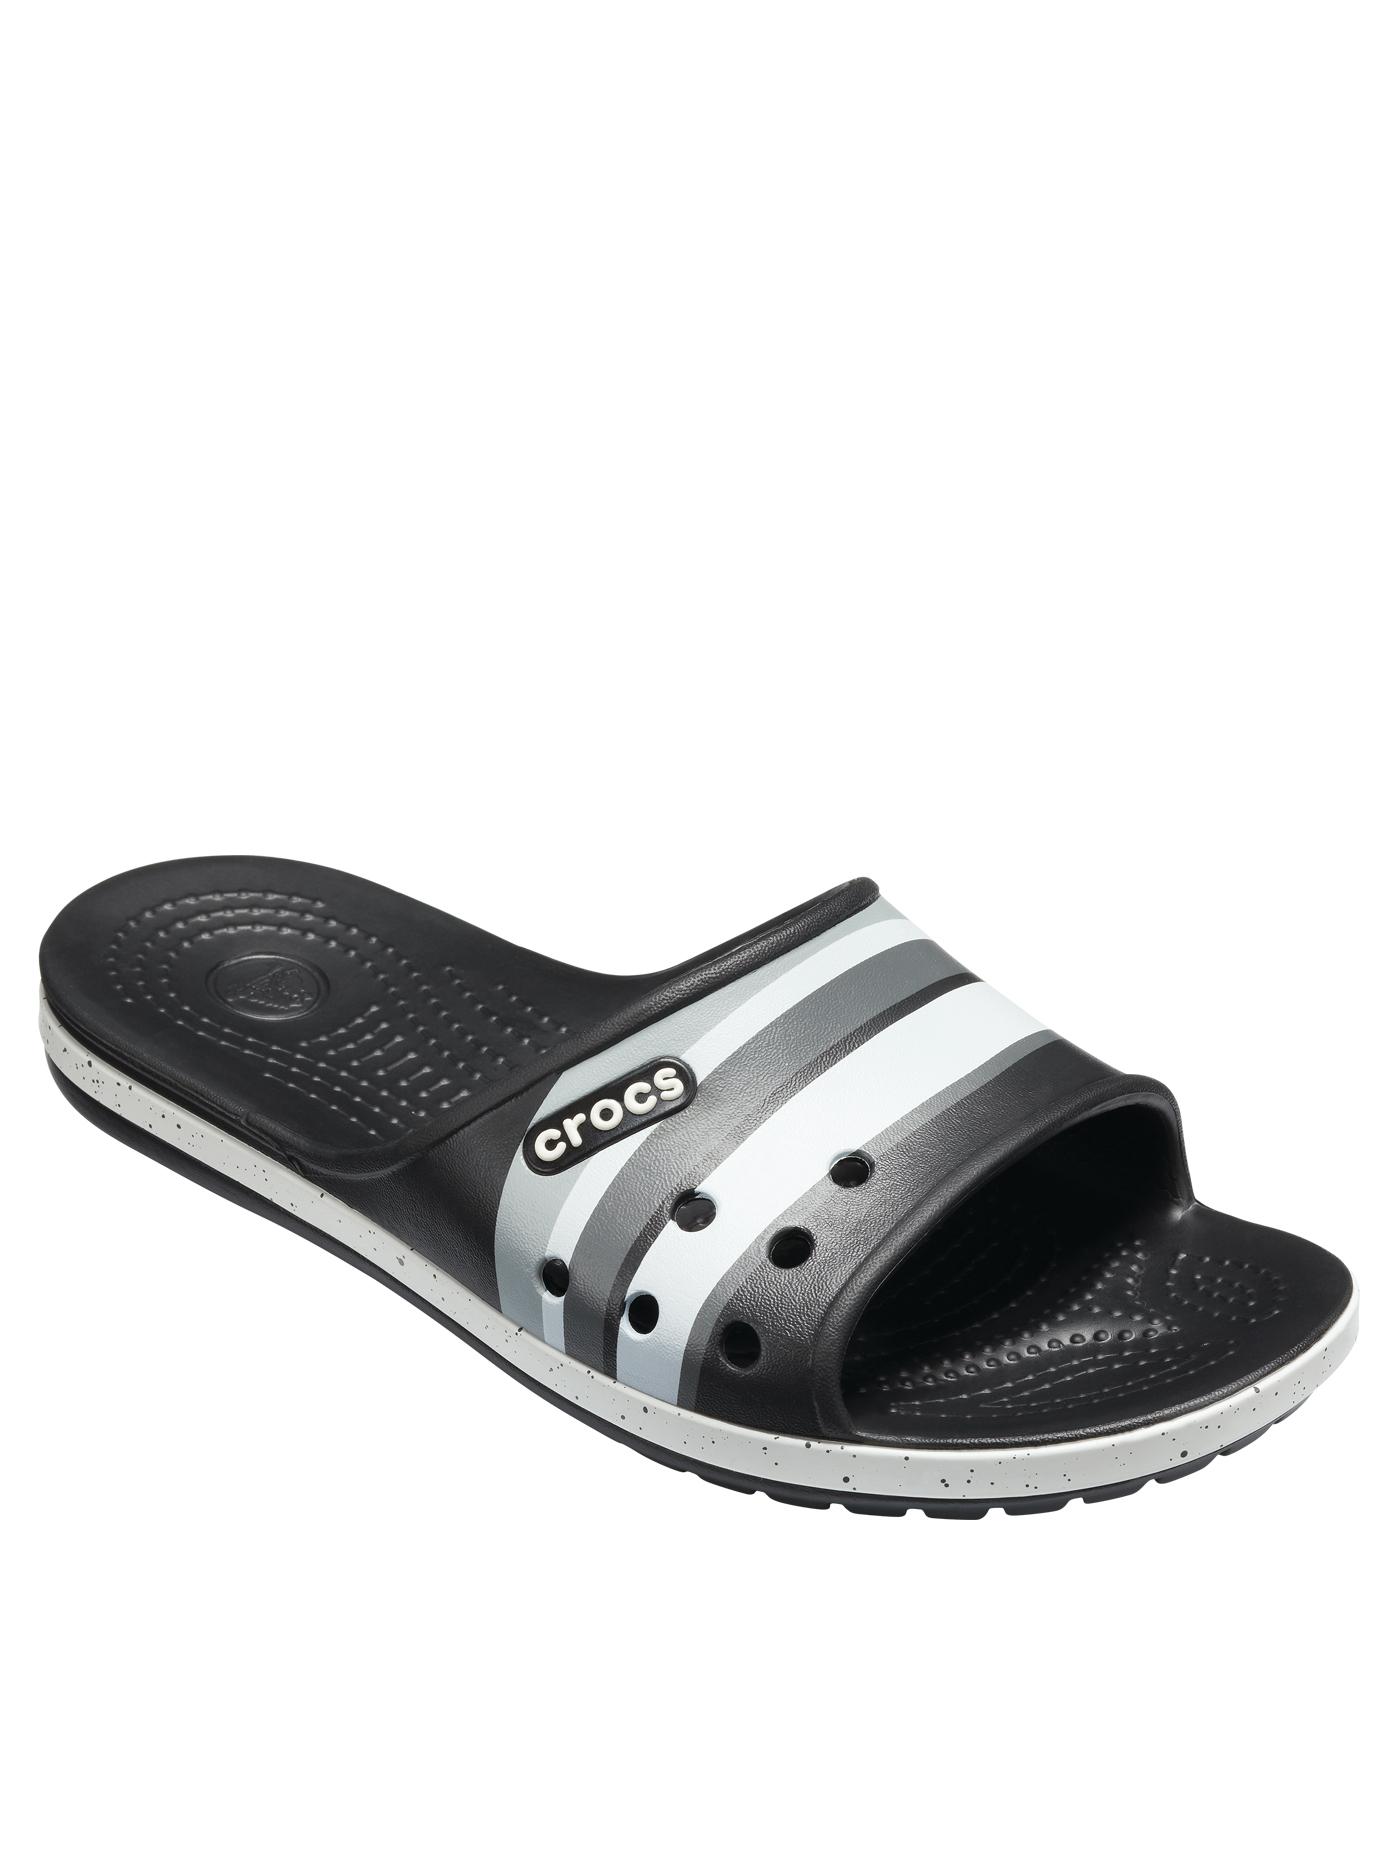 CROCS รองเท้าแตะสำหรับผู้ใหญ่ รุ่น Crocband II Graphic Slide ไซส์ M7/W9 สีดำ-ขาว